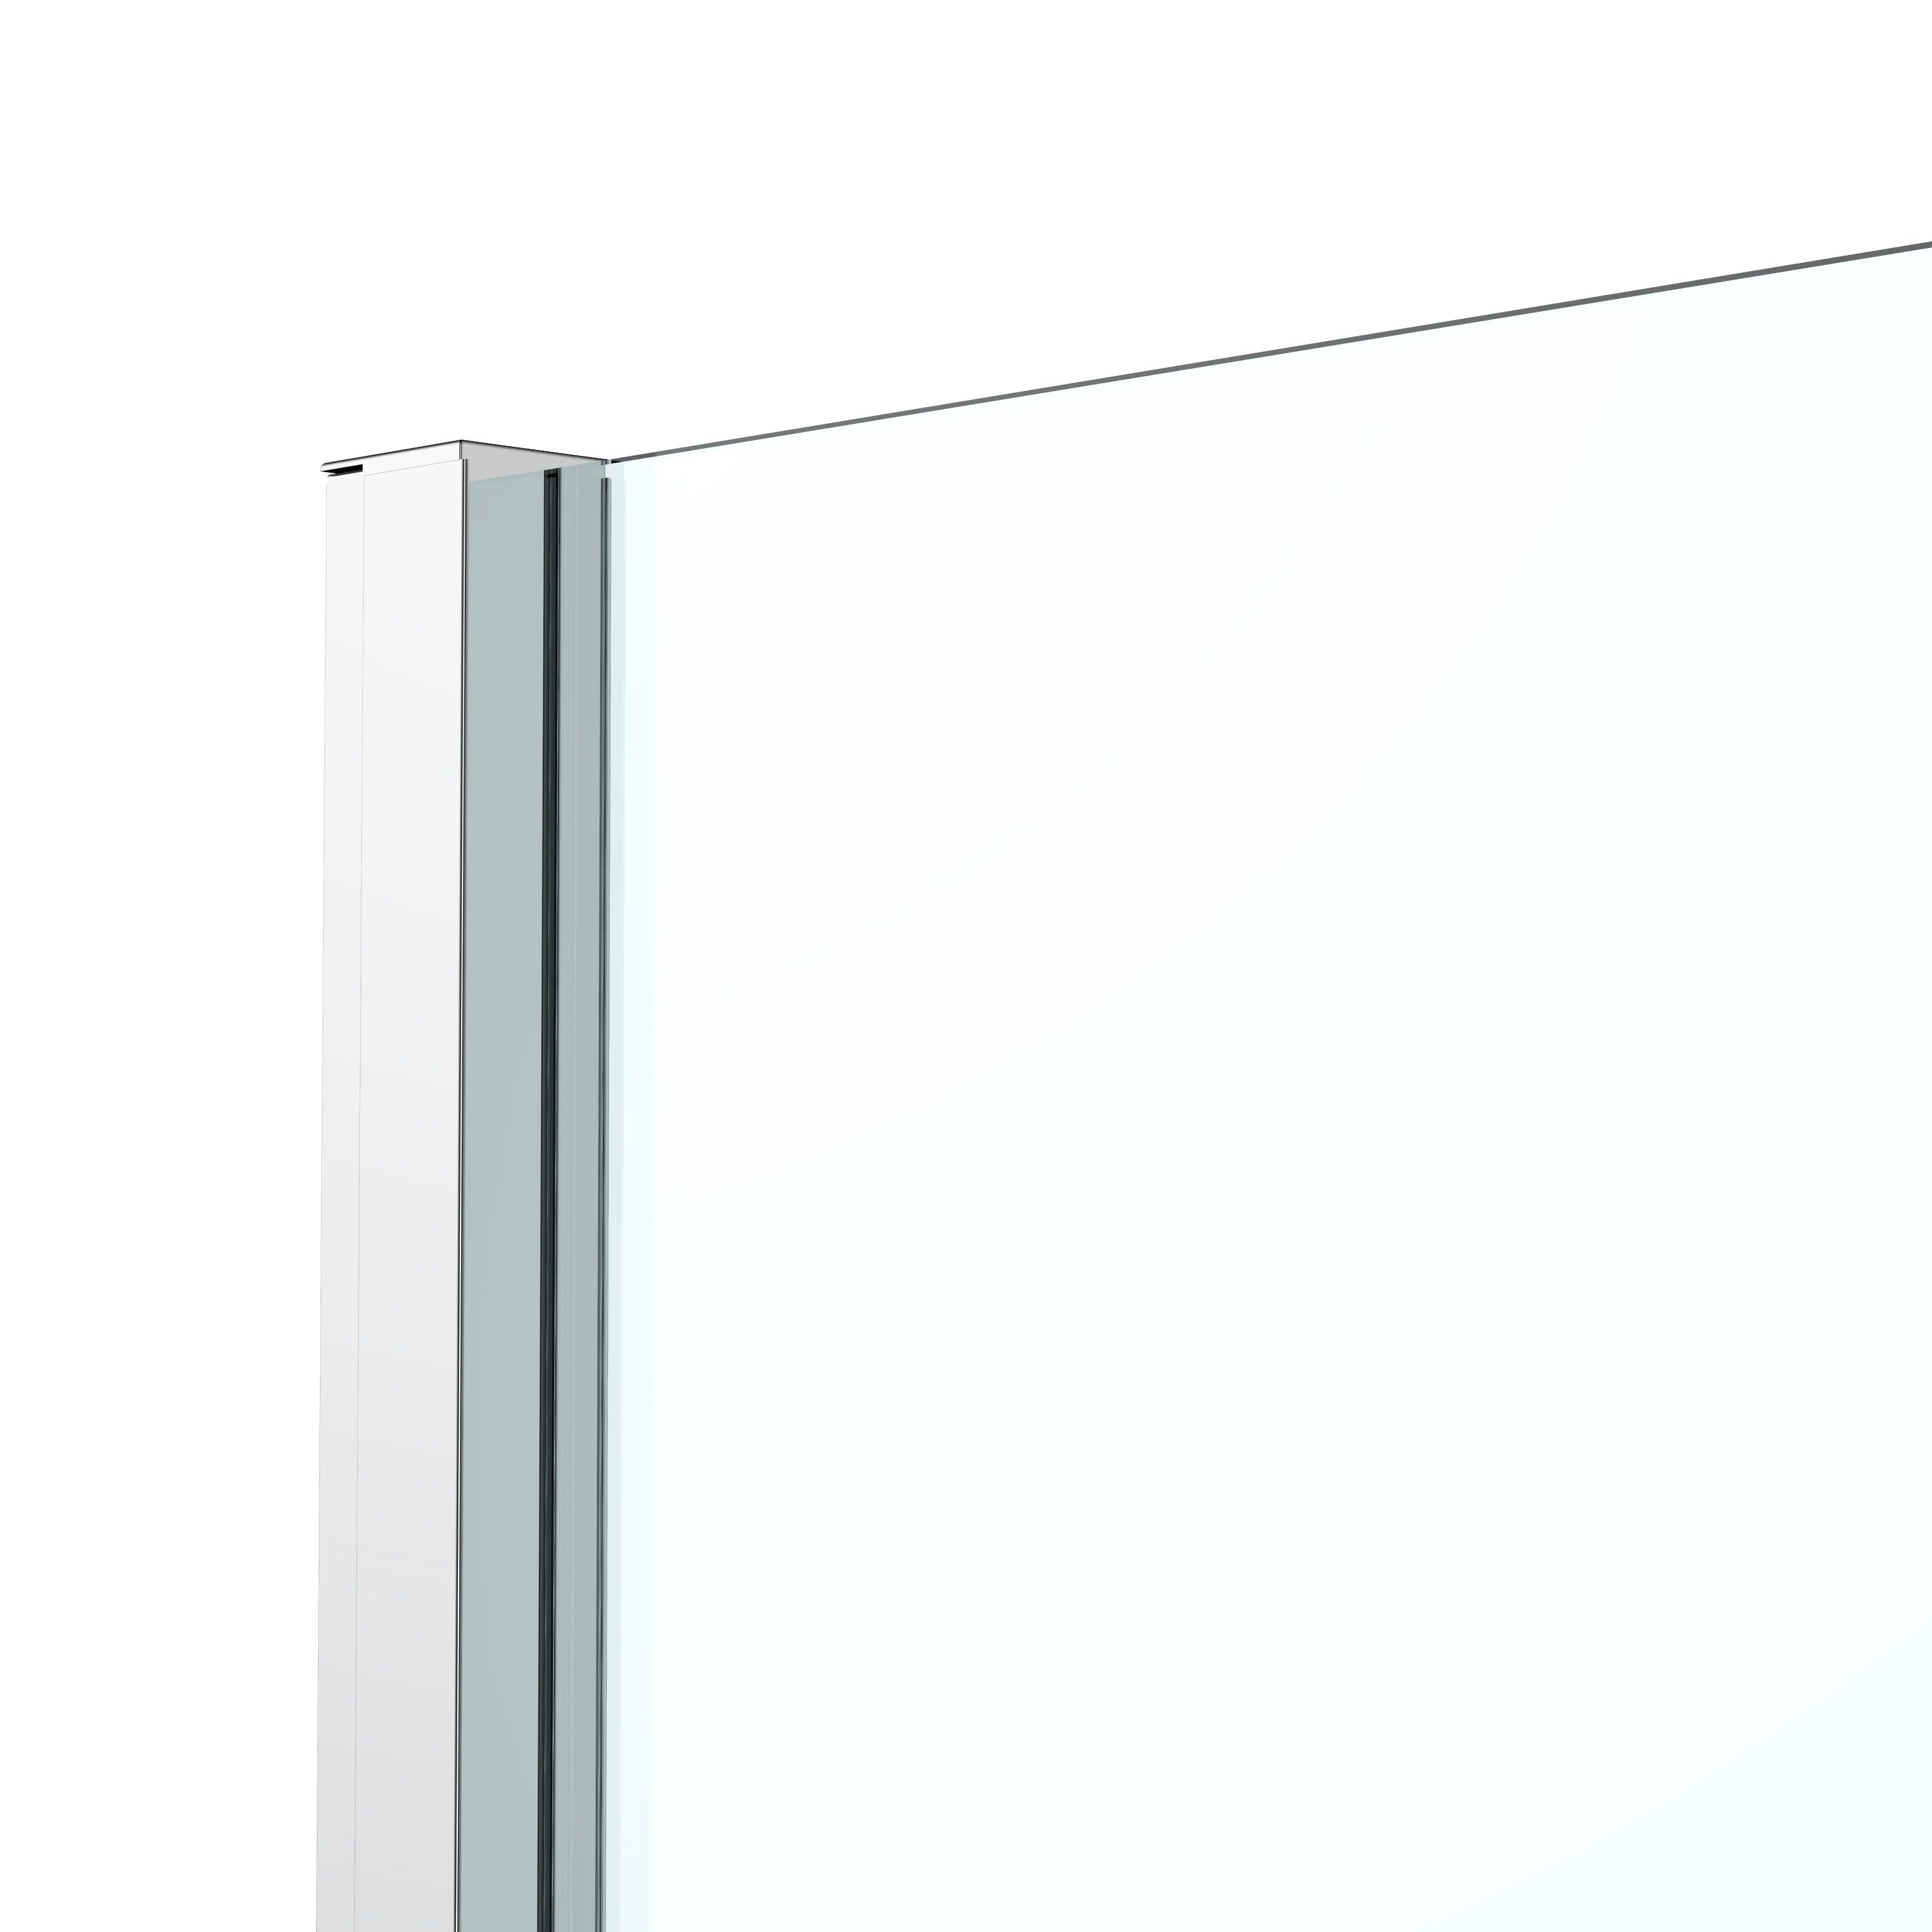 GoodHome Ledava Framed Chrome Mirror Fixed Side End panel (H)195cm (W)76cm